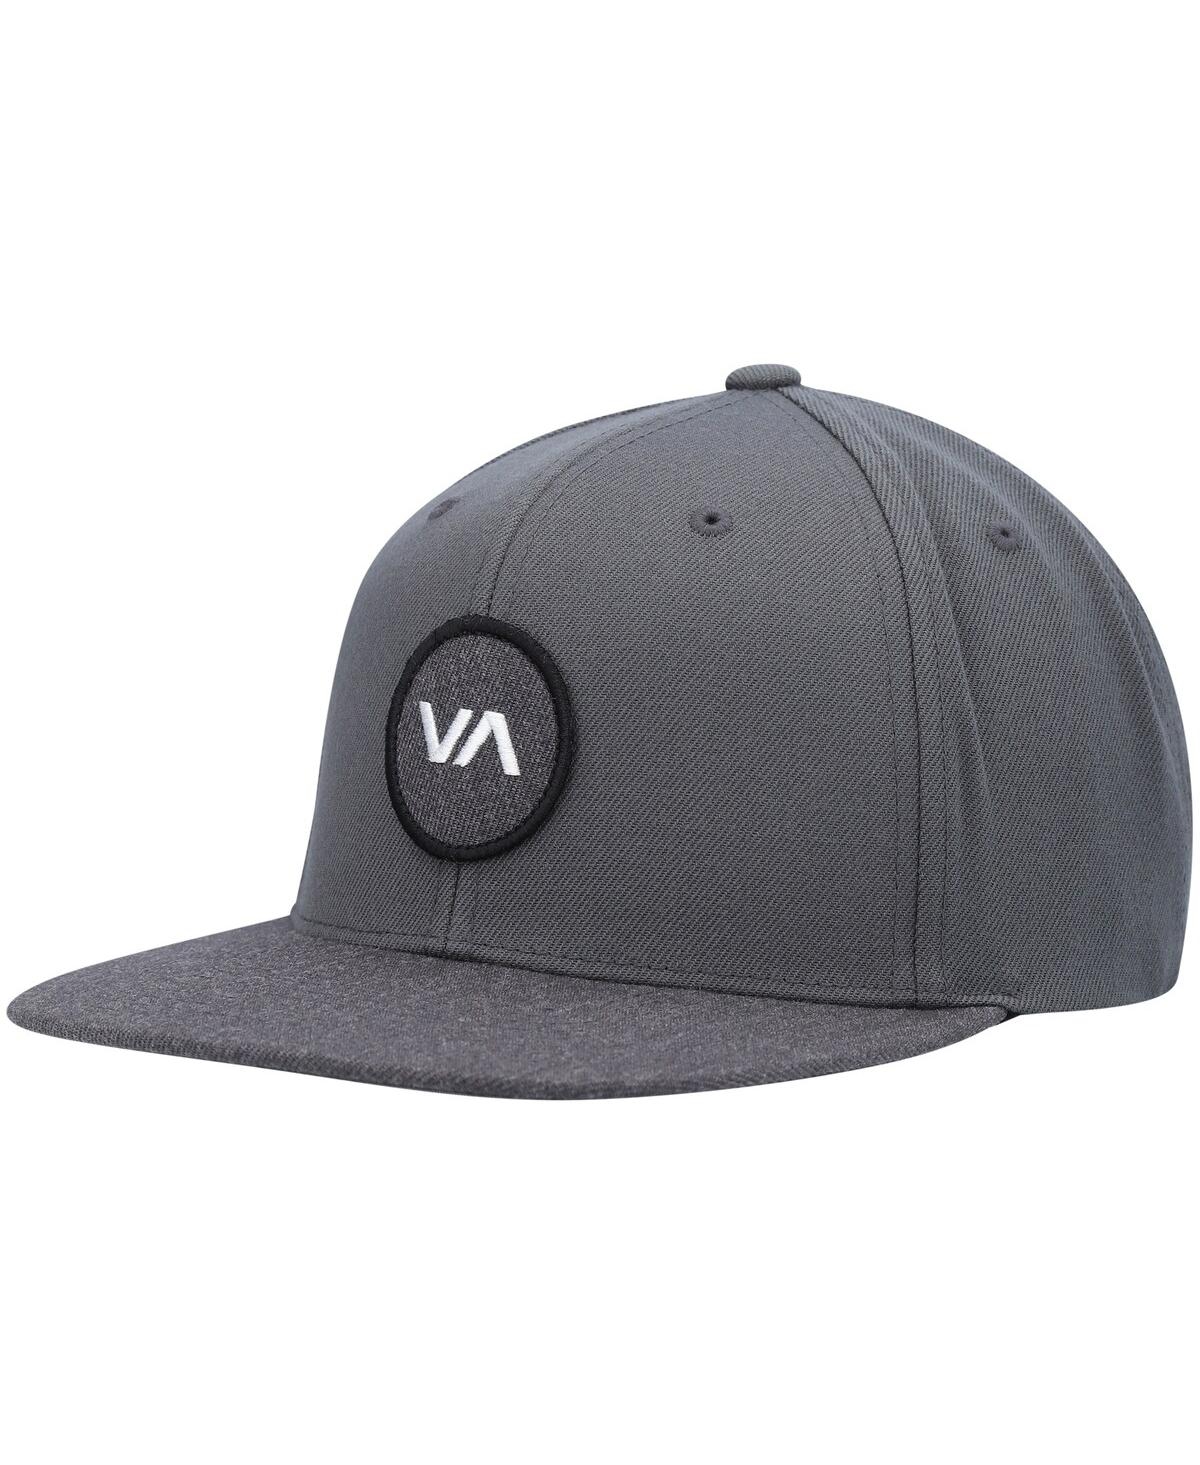 Rvca Men's  Graphite Va Patch Adjustable Snapback Hat